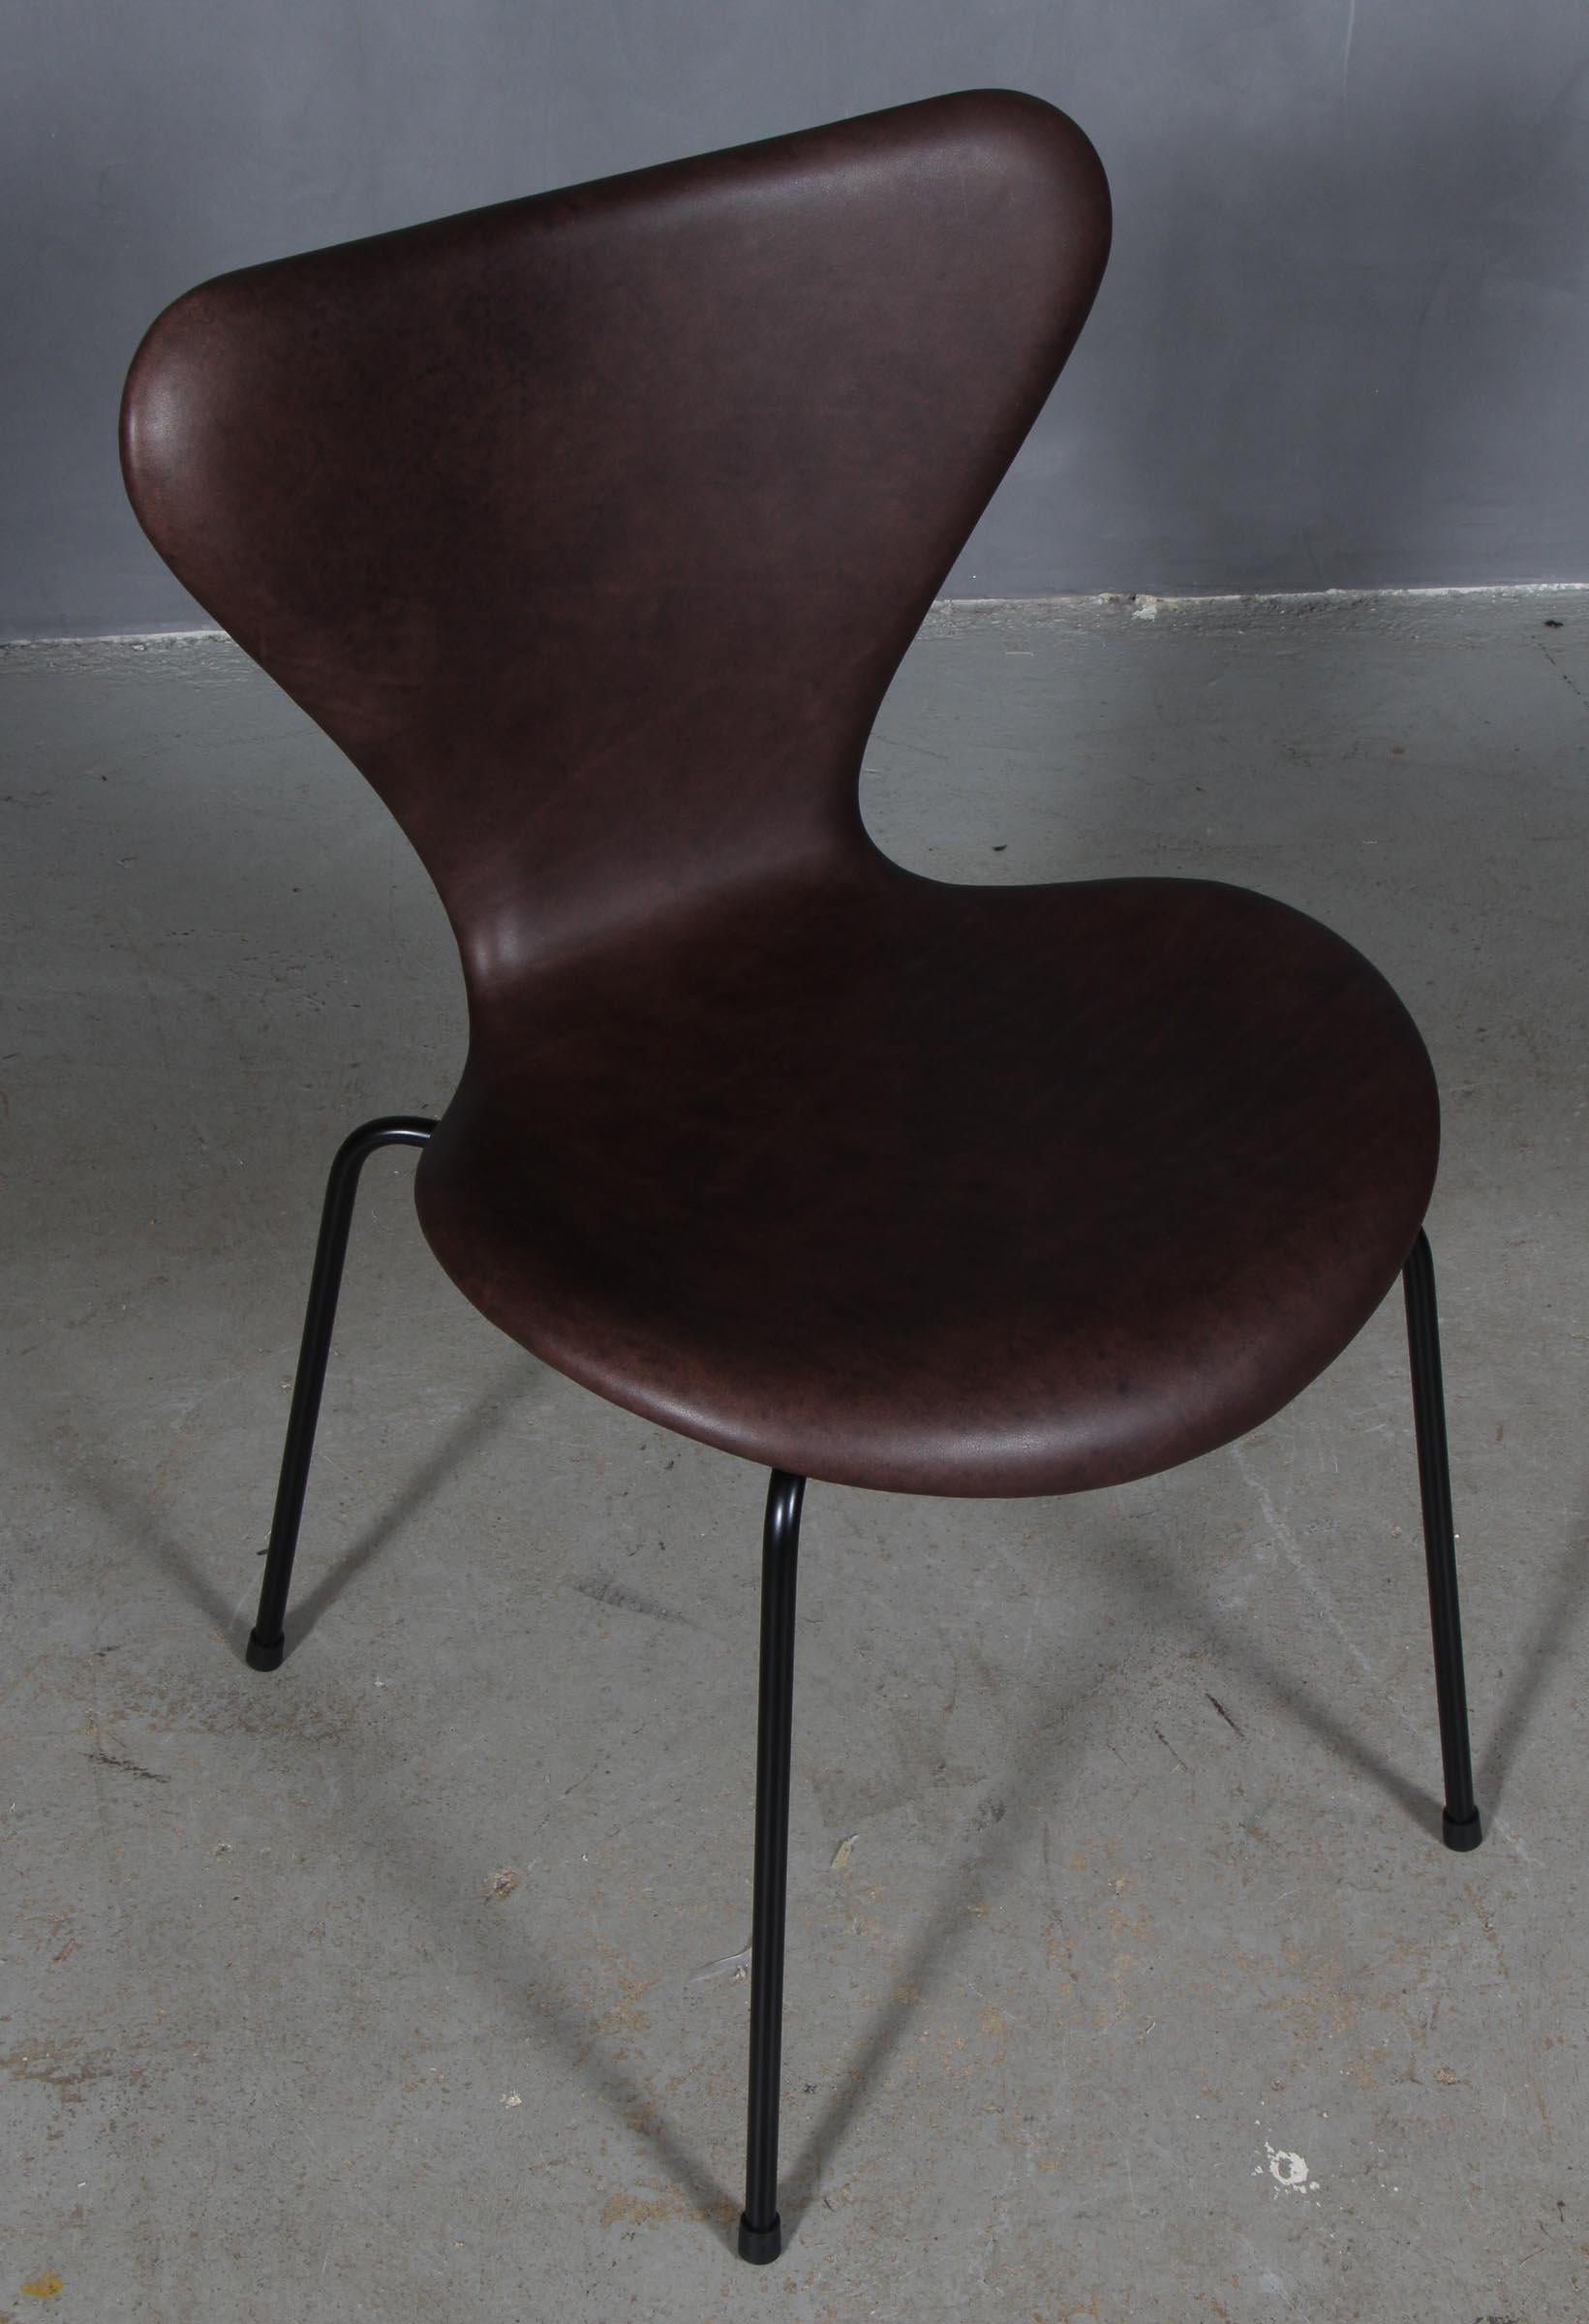 Arne Jacobsen dining chair new upholstered with Mokka aniline leather.

Base of powder coated steel tube.

Model 3107 Syveren, made by Fritz Hansen.